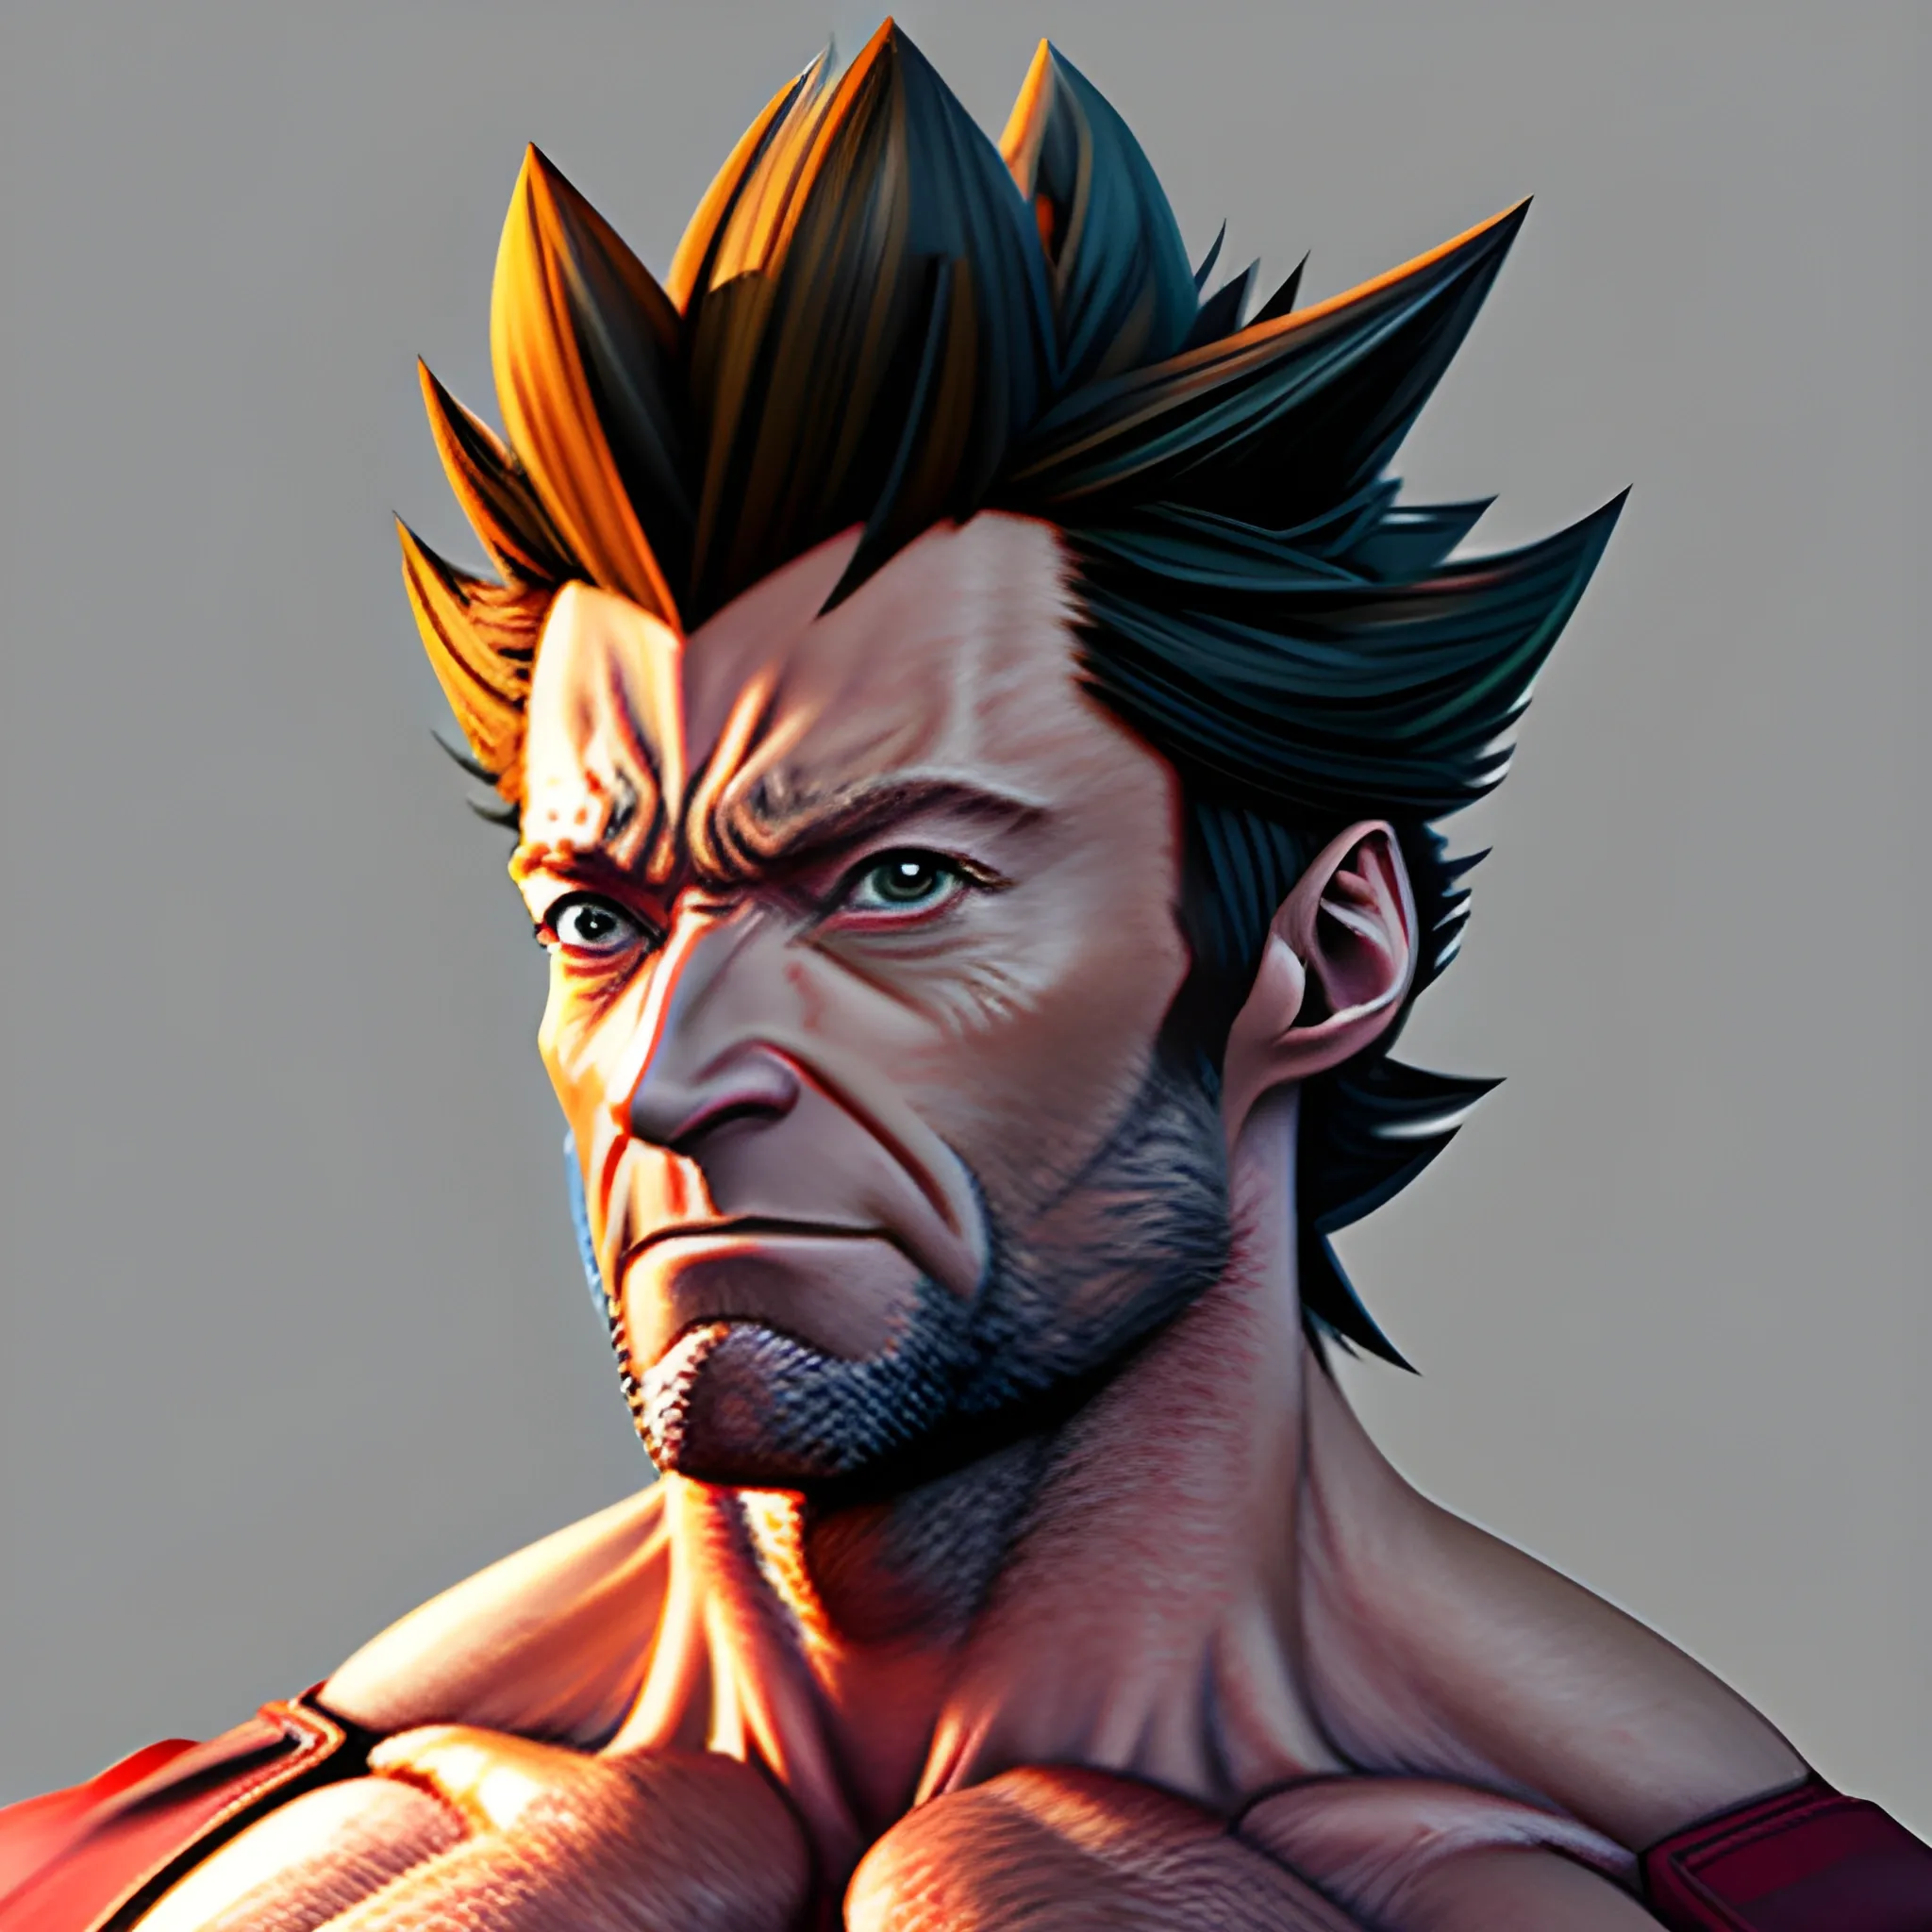 Hugh Jackman as Wolverine anime style, 3D